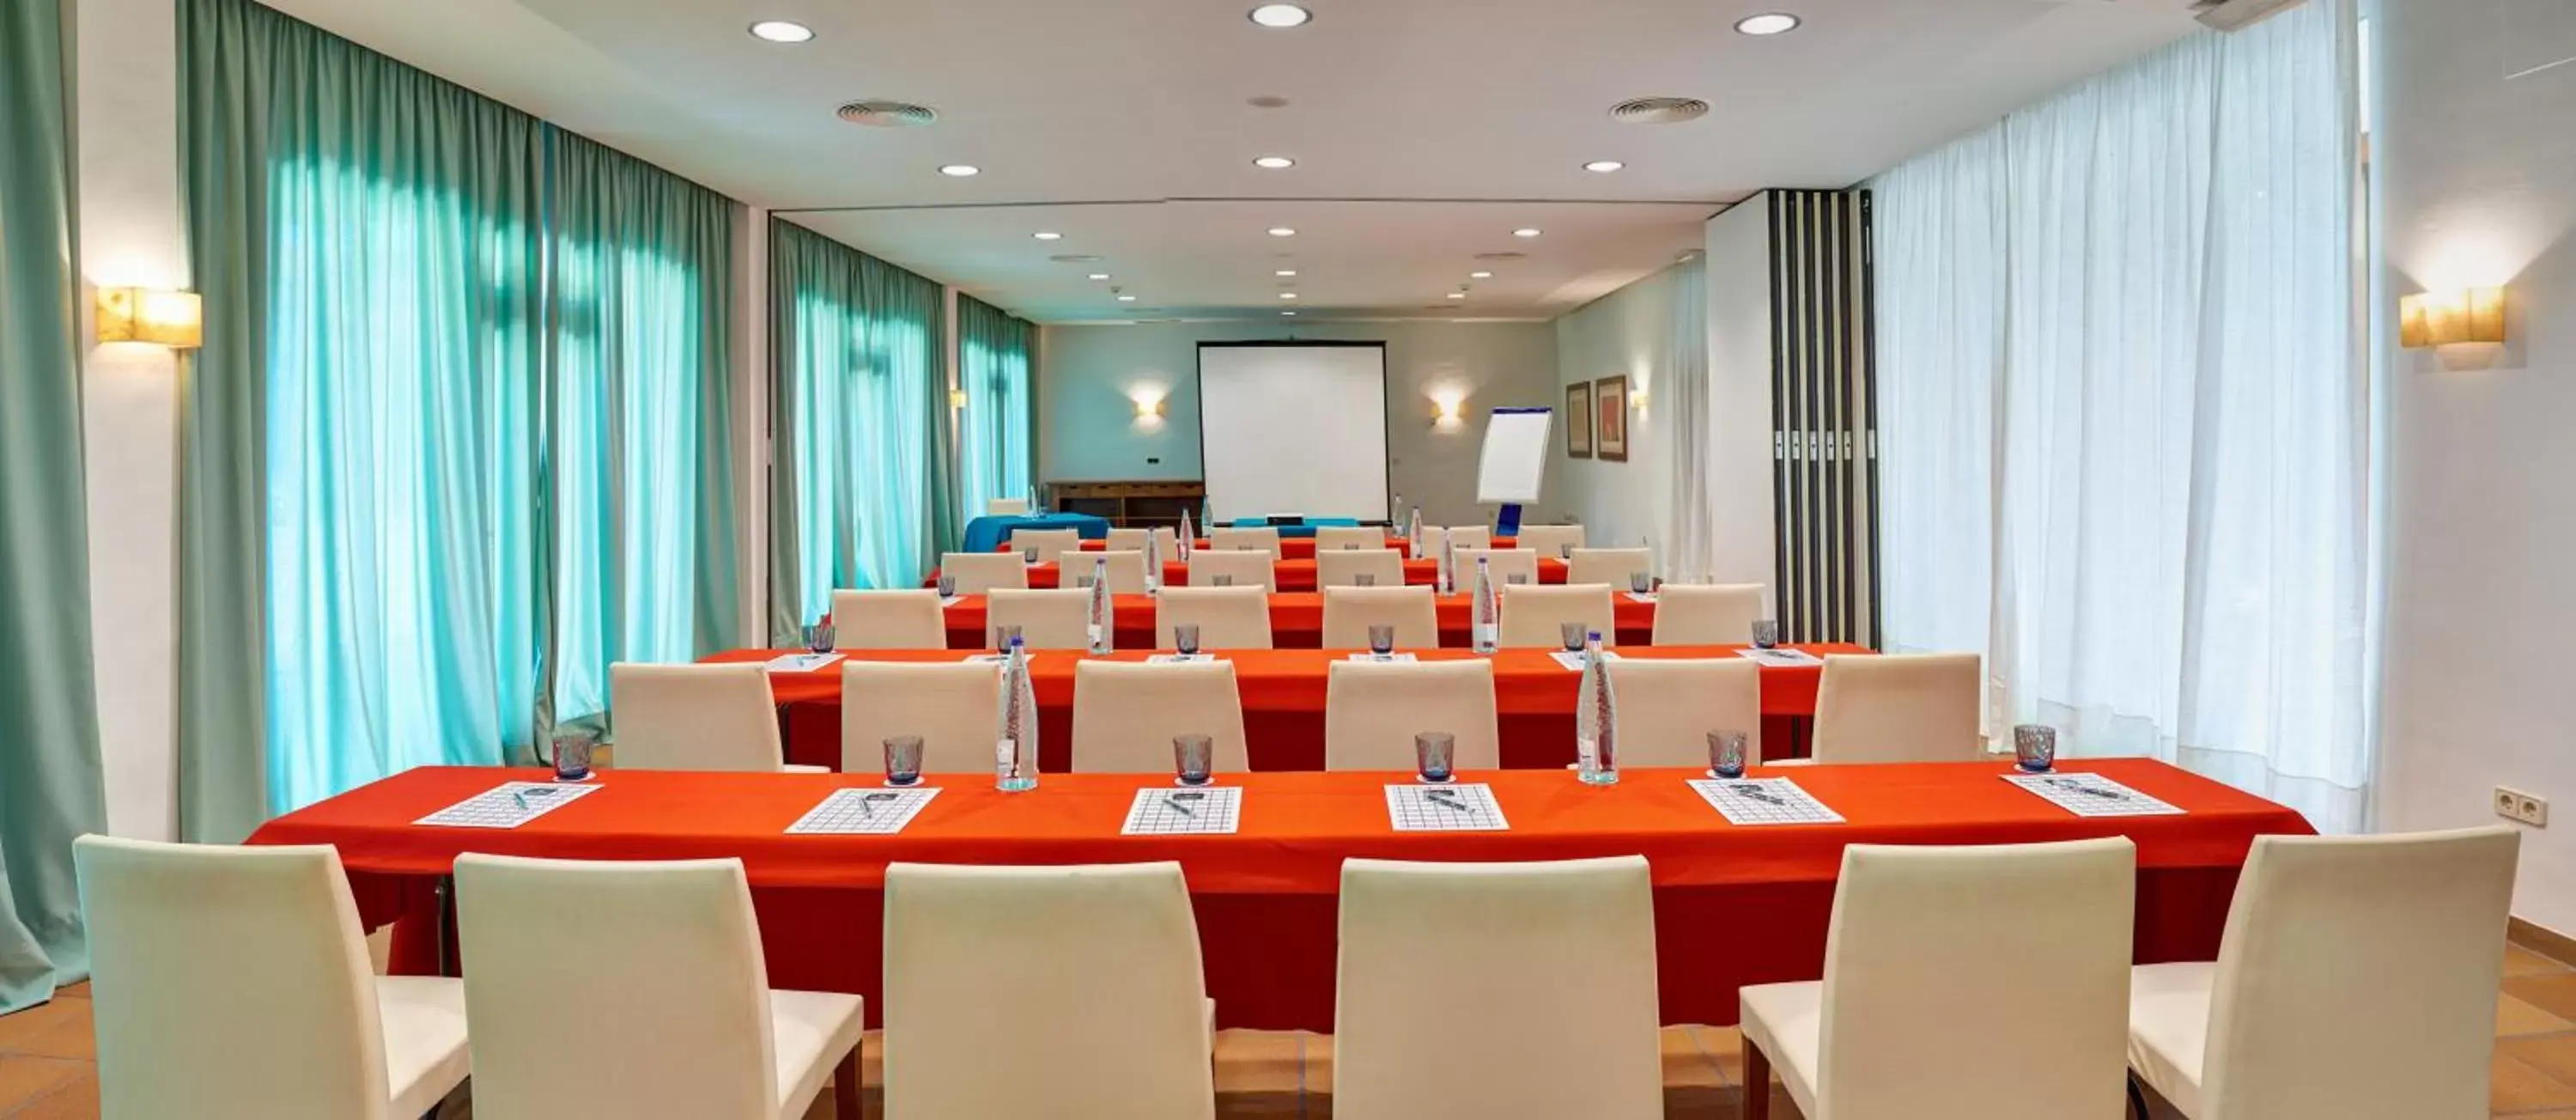 Meeting/conference room in Parador de Benicarló